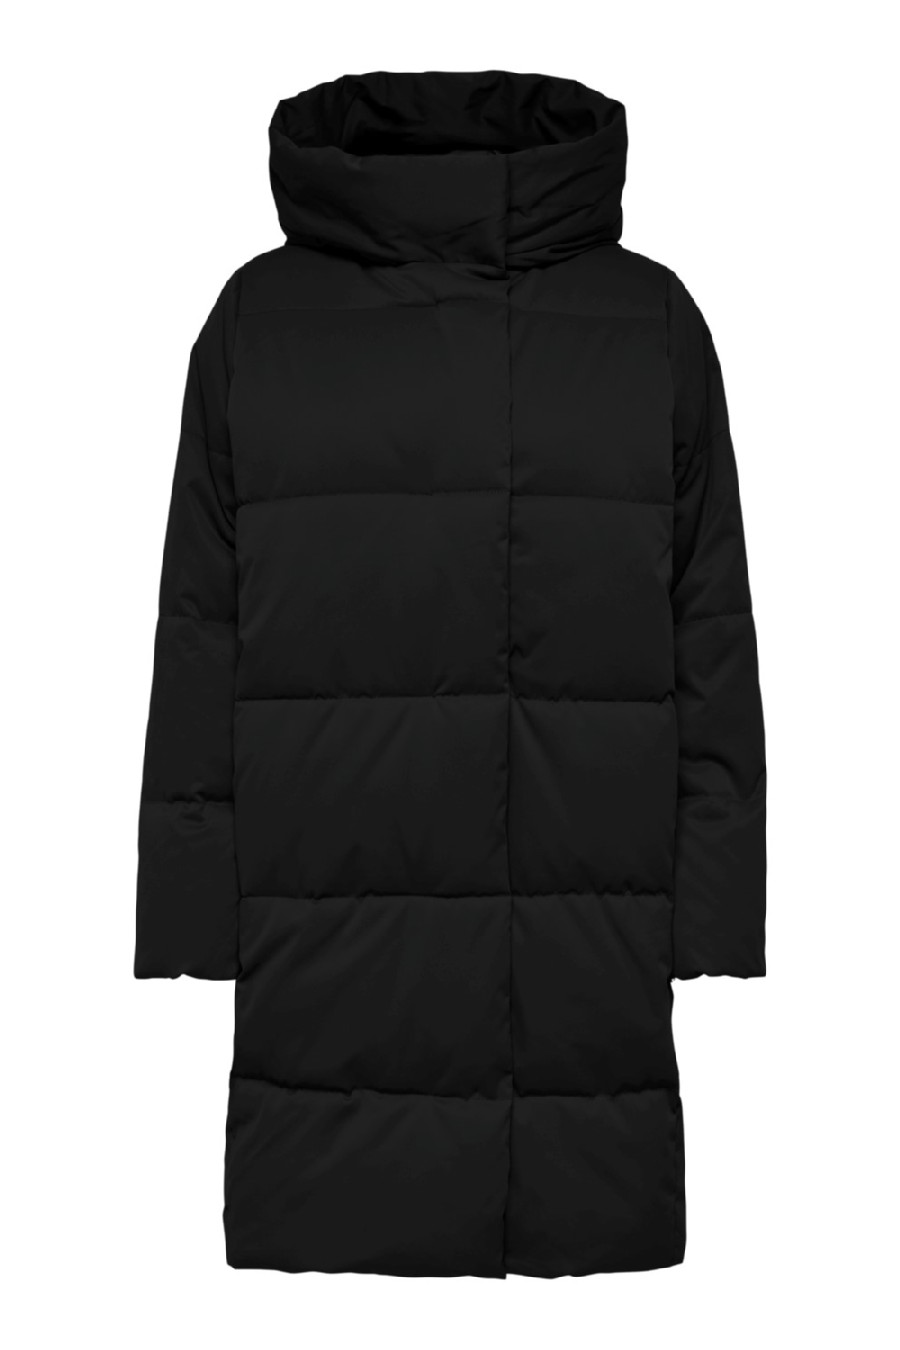 Зимняя куртка JACQUELINE DE YONG 15270979-Black